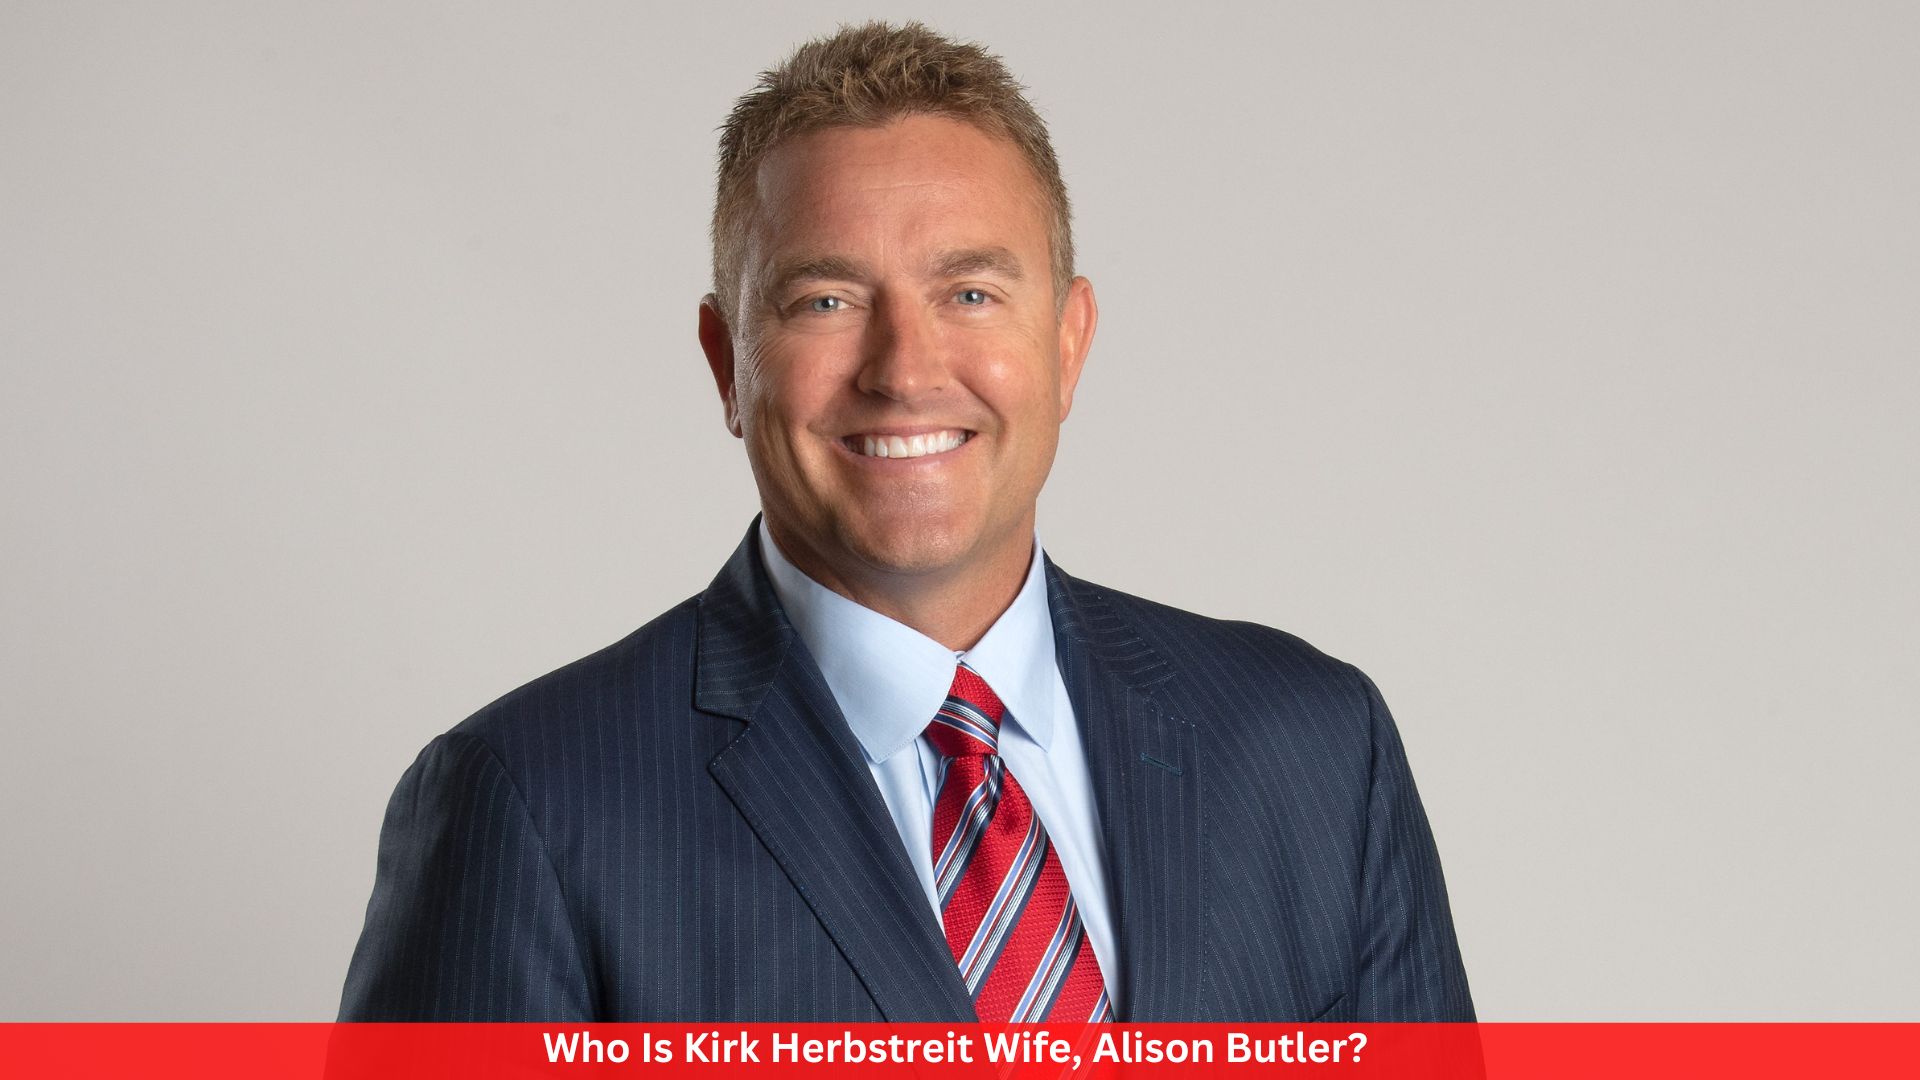 Who Is Kirk Herbstreit Wife, Alison Butler?